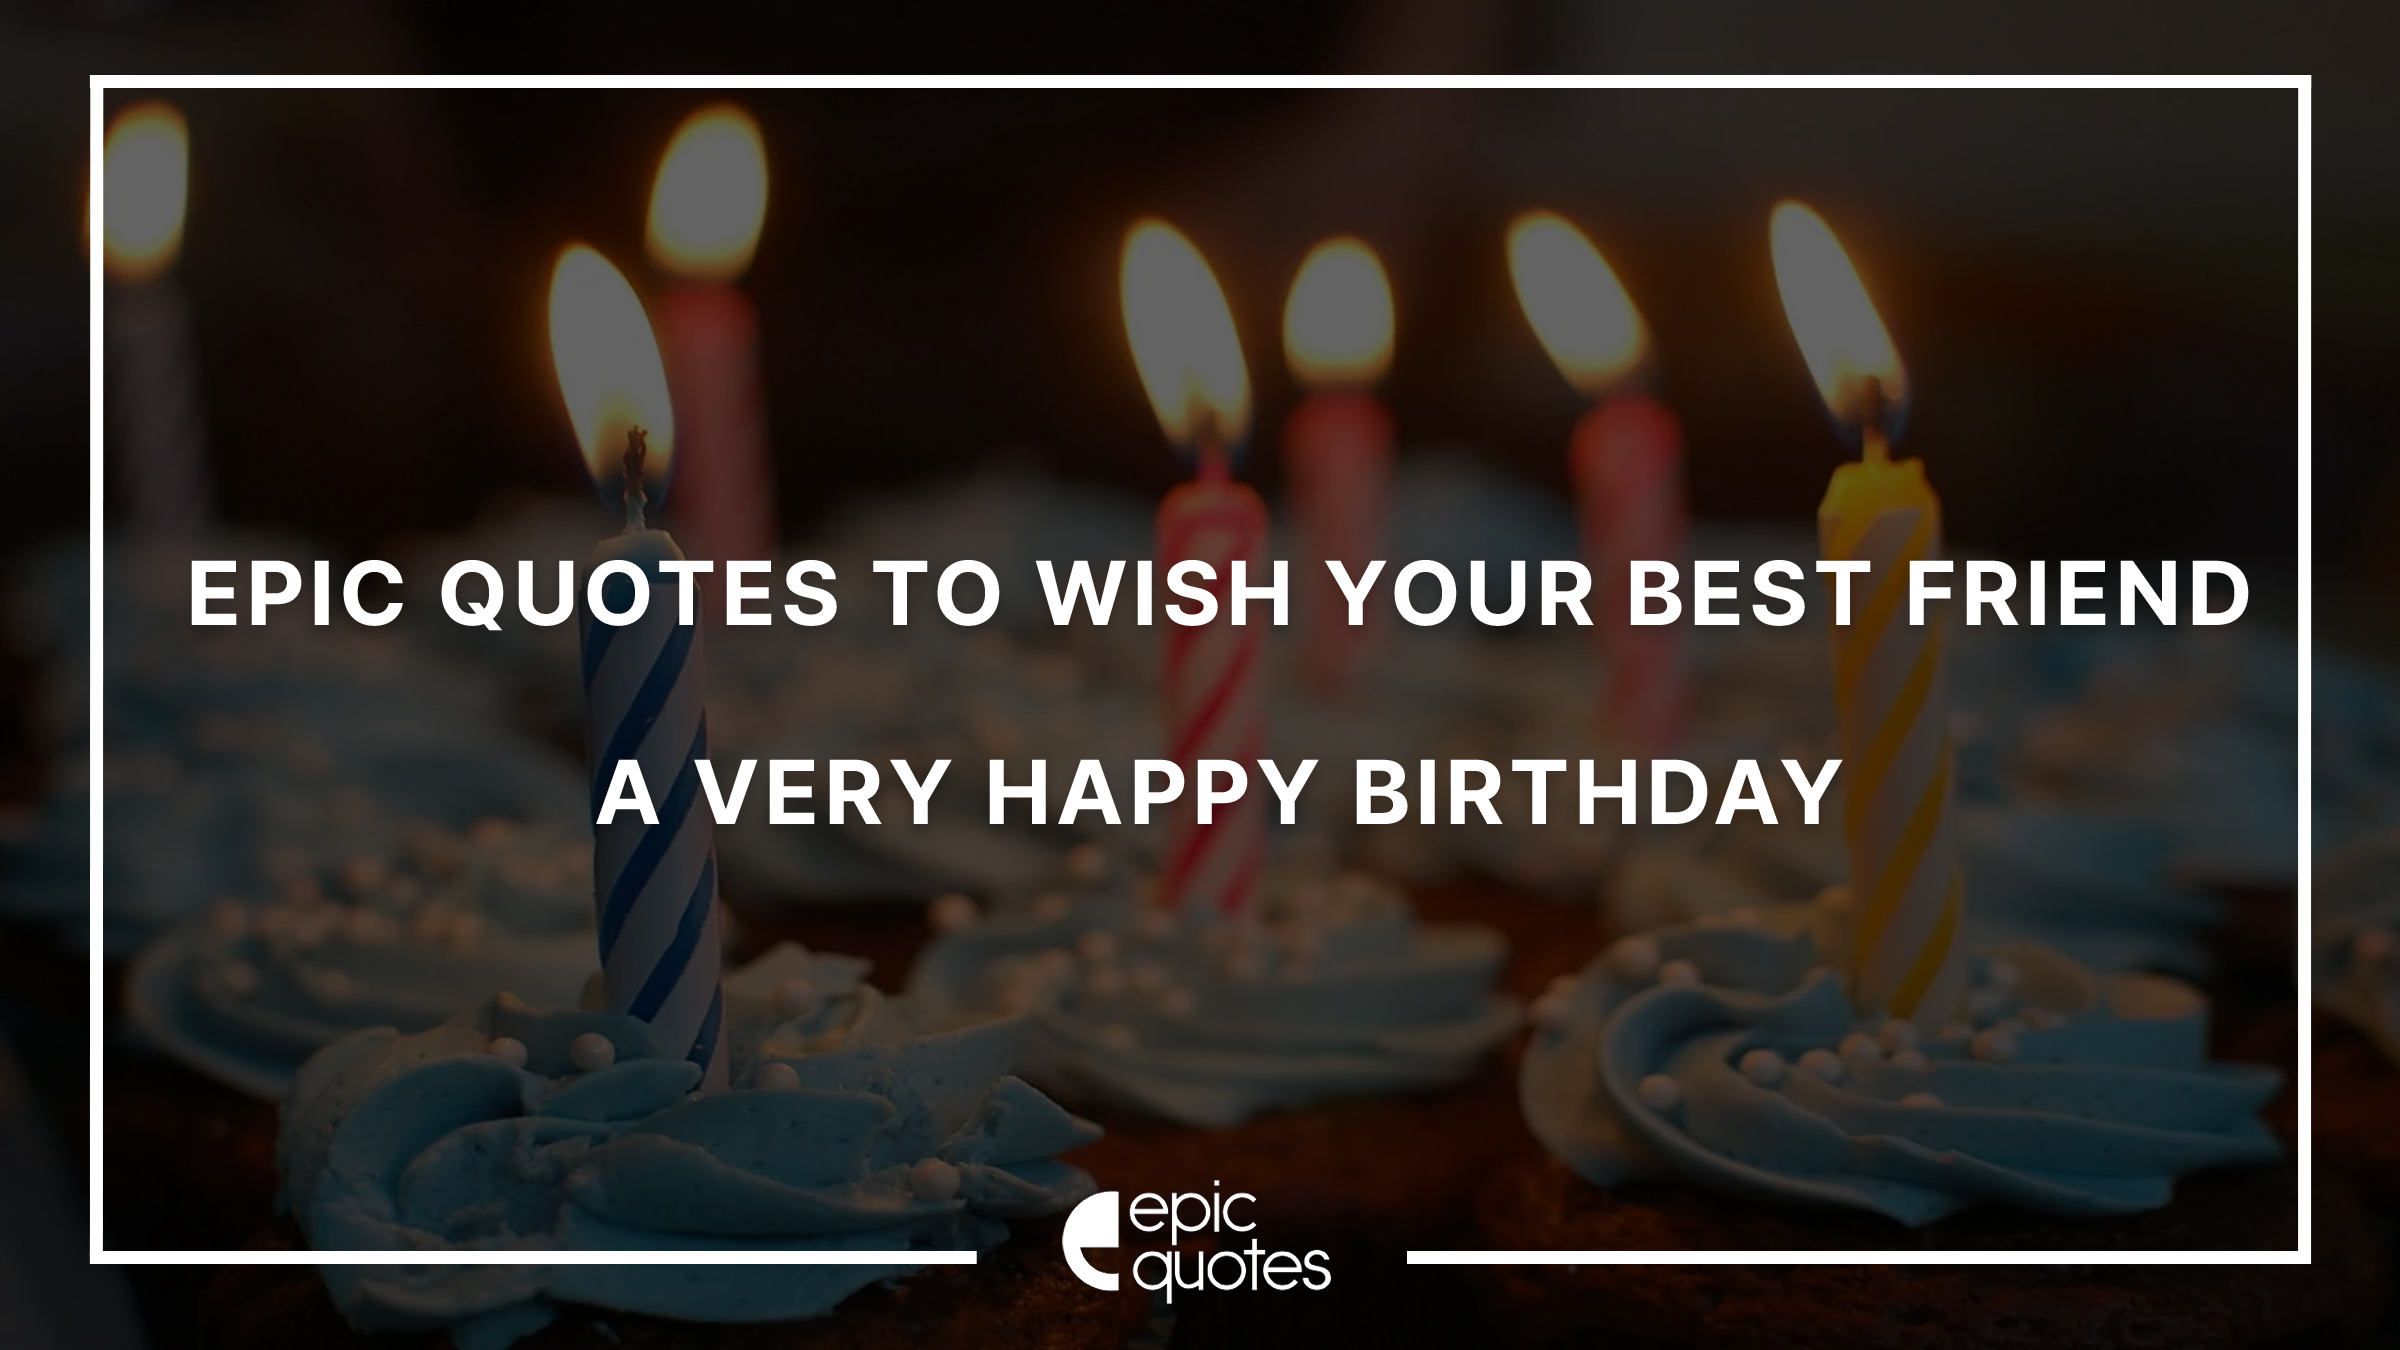 How to wish happy birthday